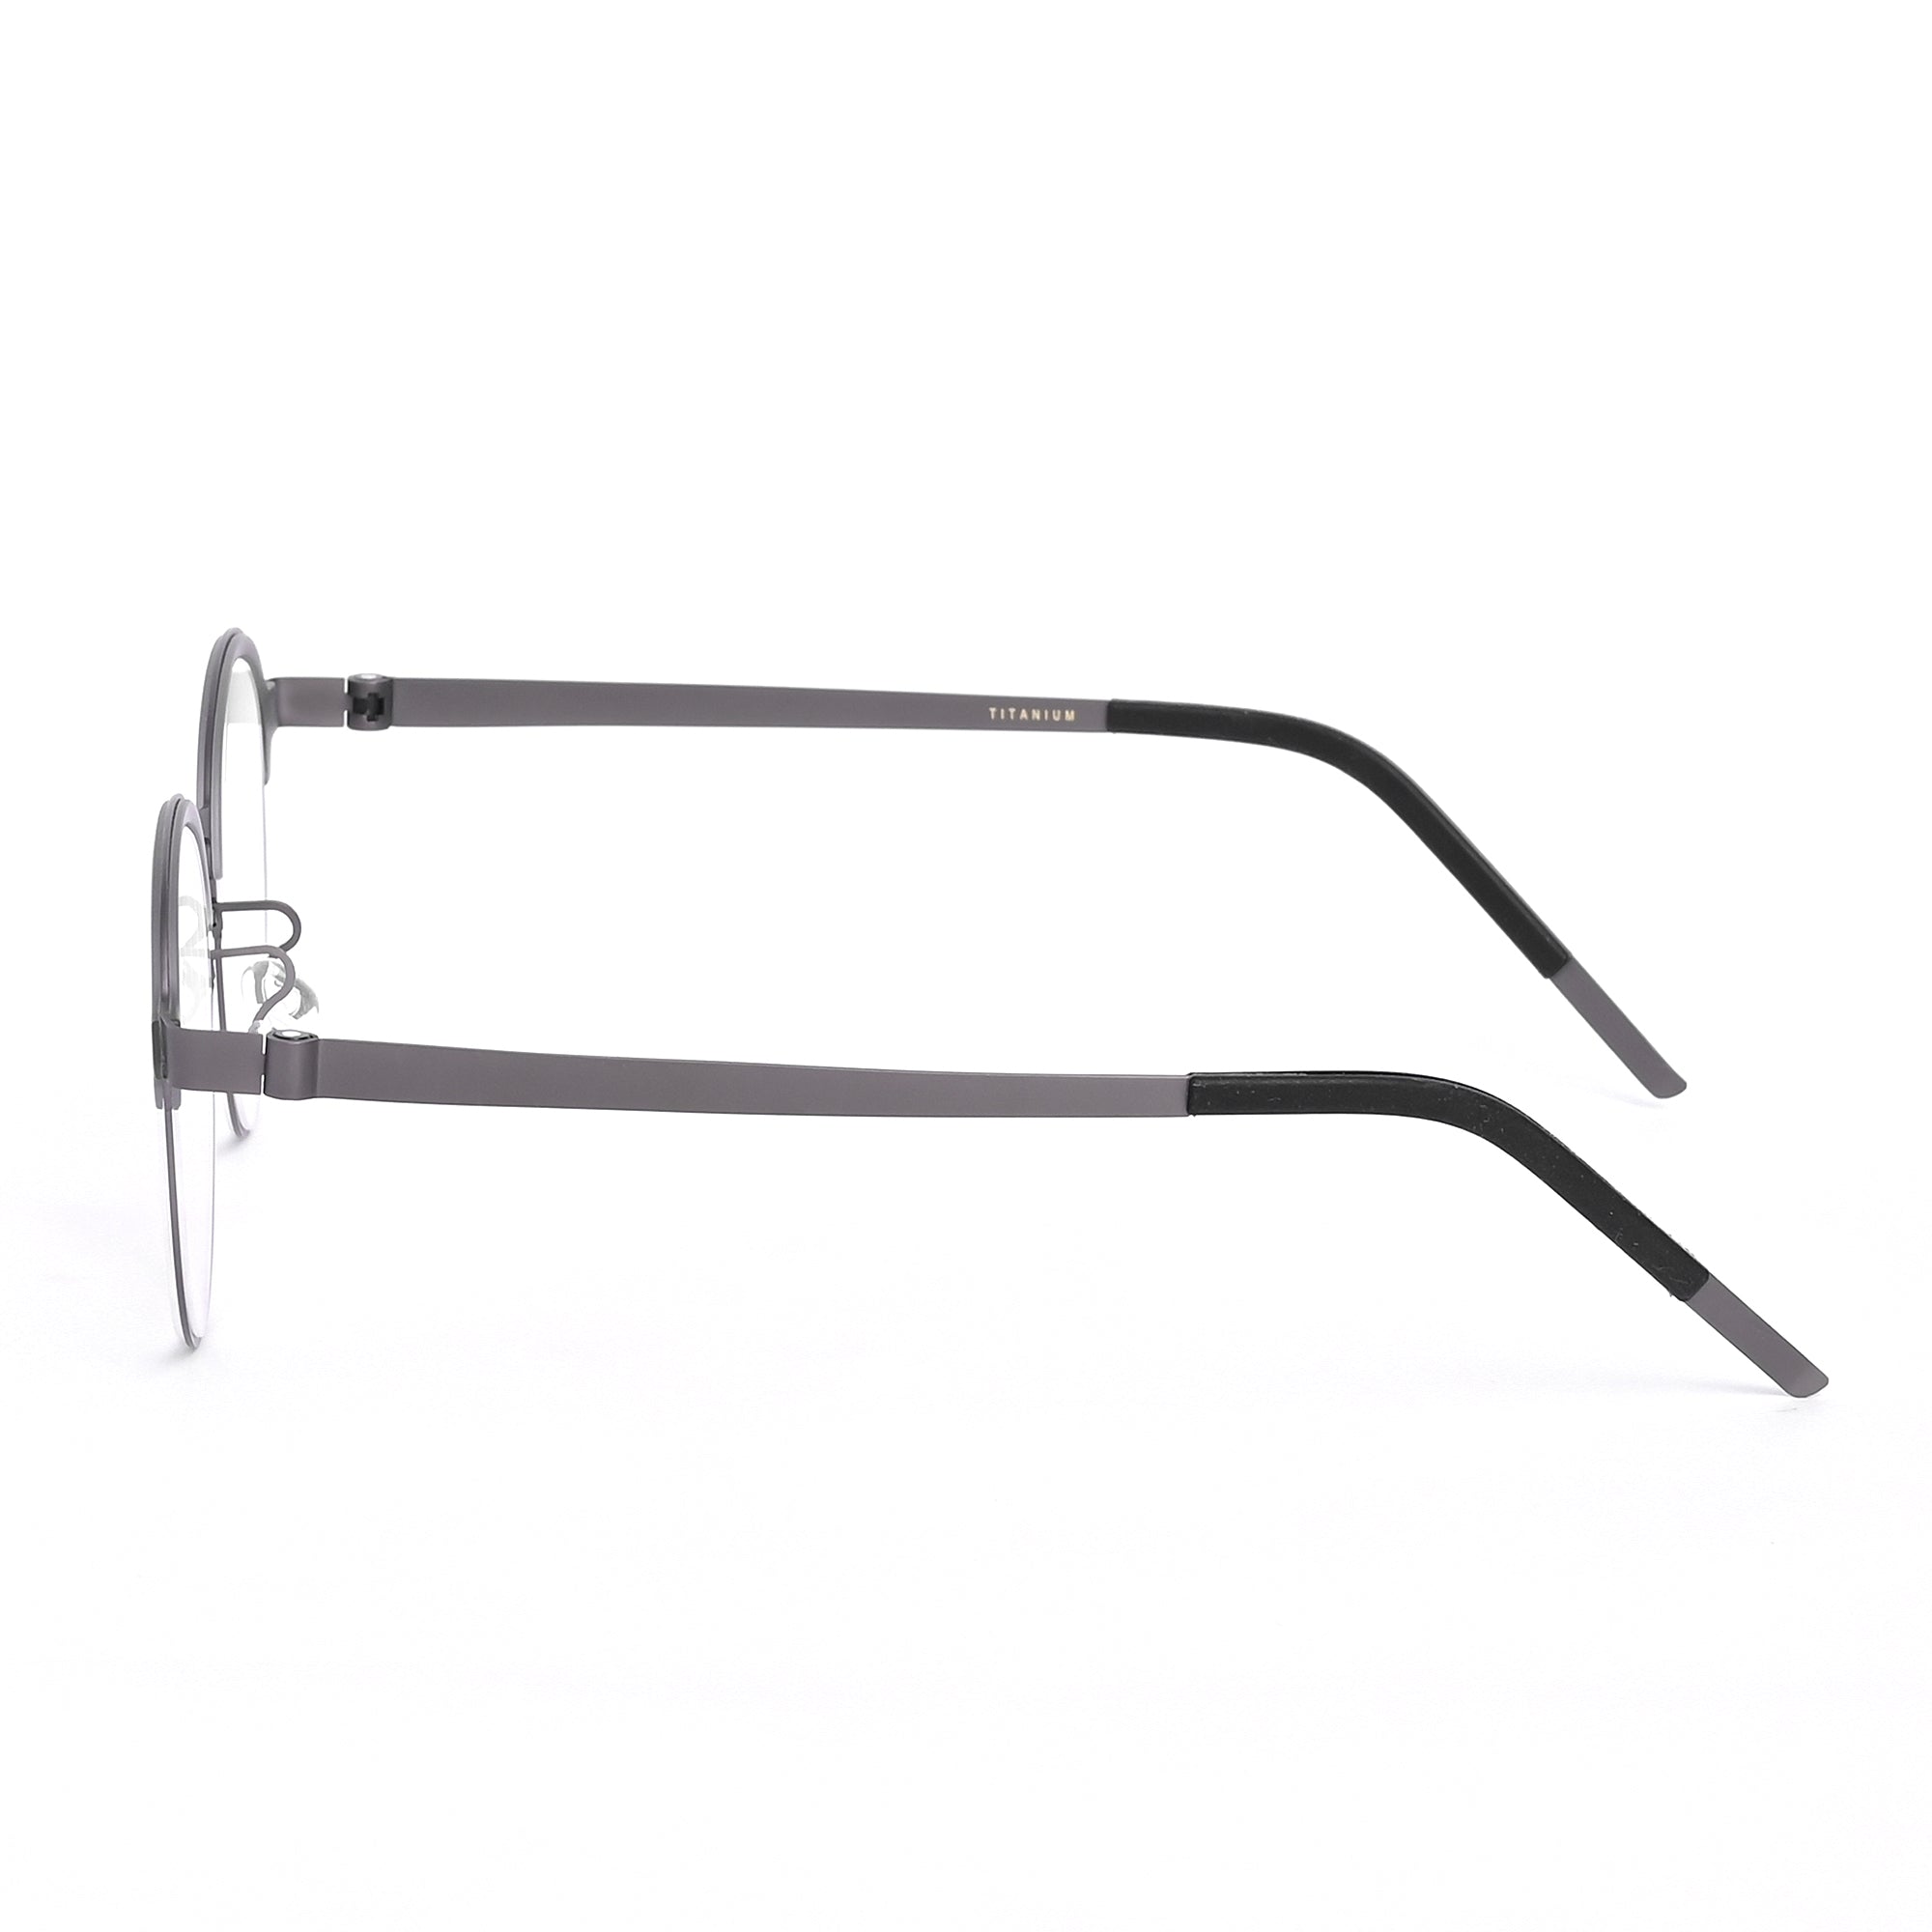 Grey Round Keymount Computer Eyeglasses - LG-004 GRY